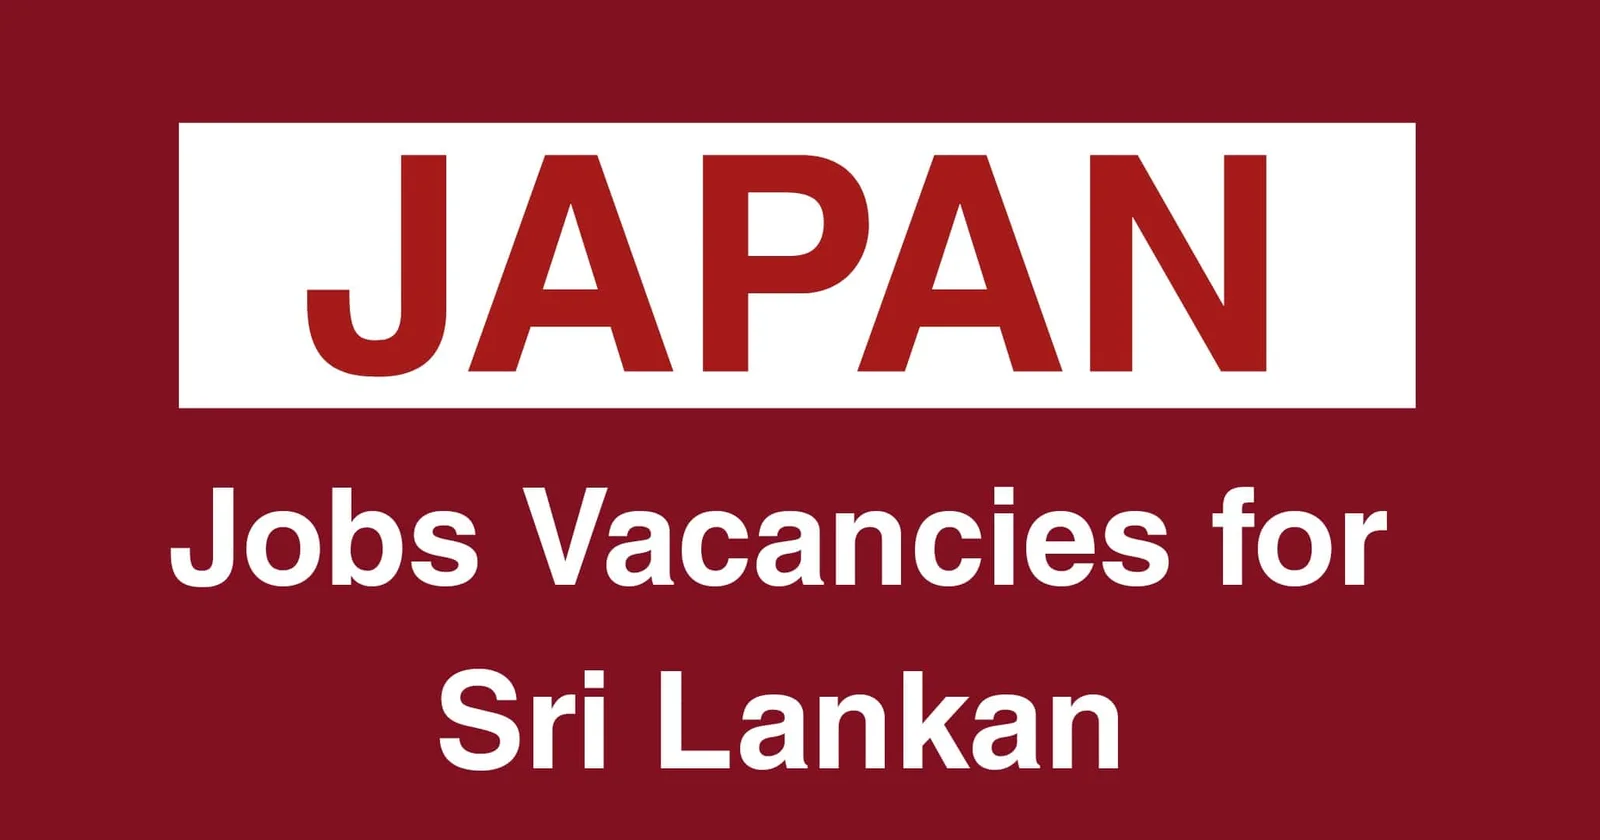 Japan Jobs Vacancies for Sri Lankan